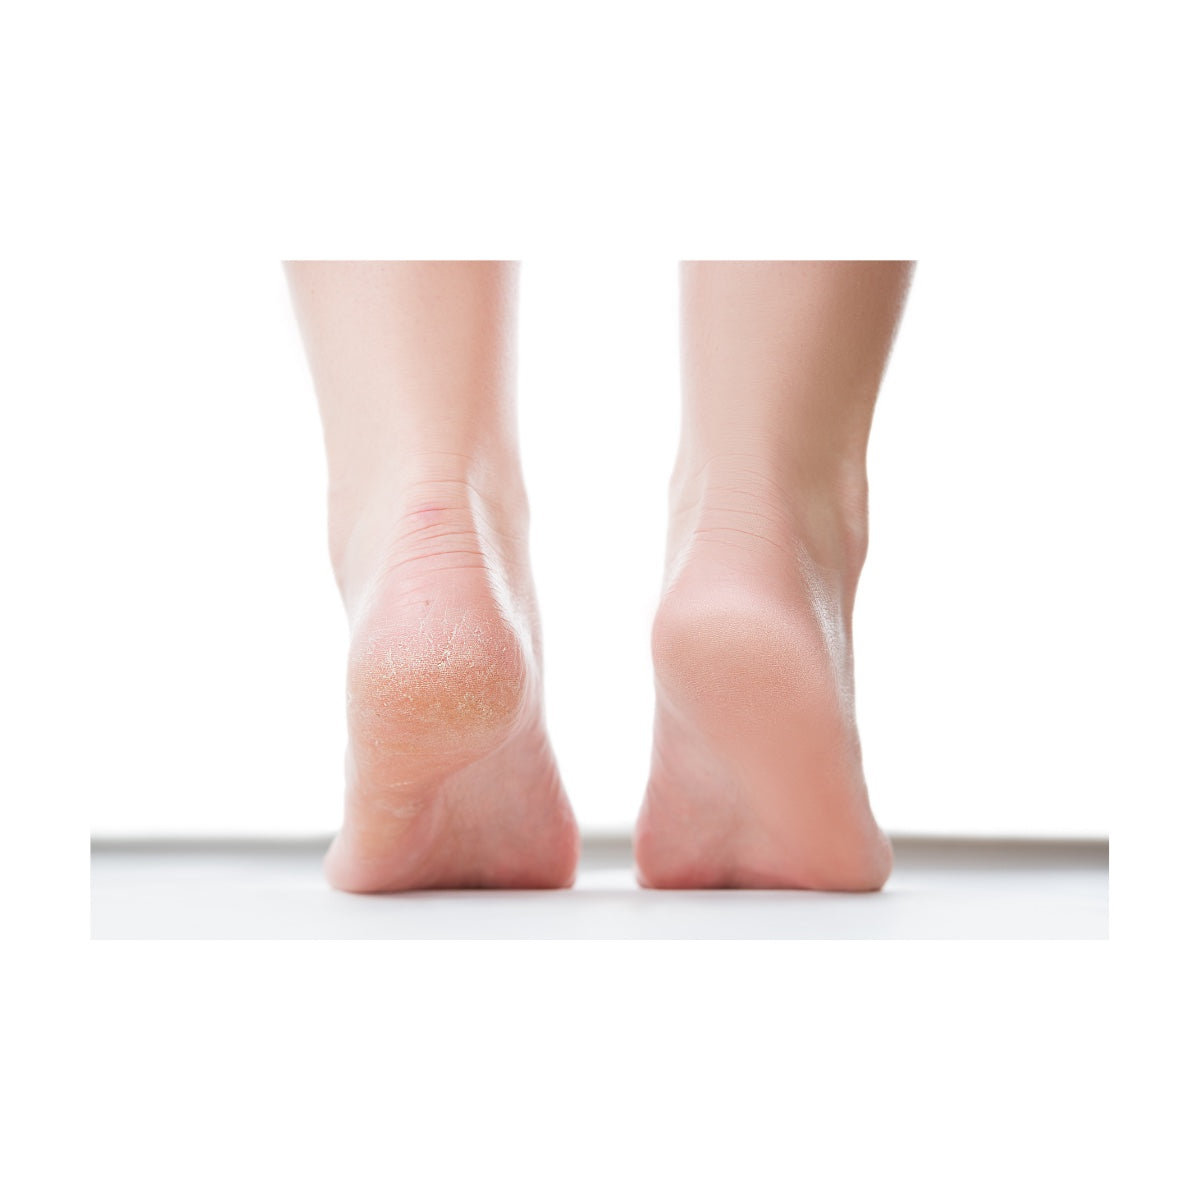 baby foot original: a foot peel